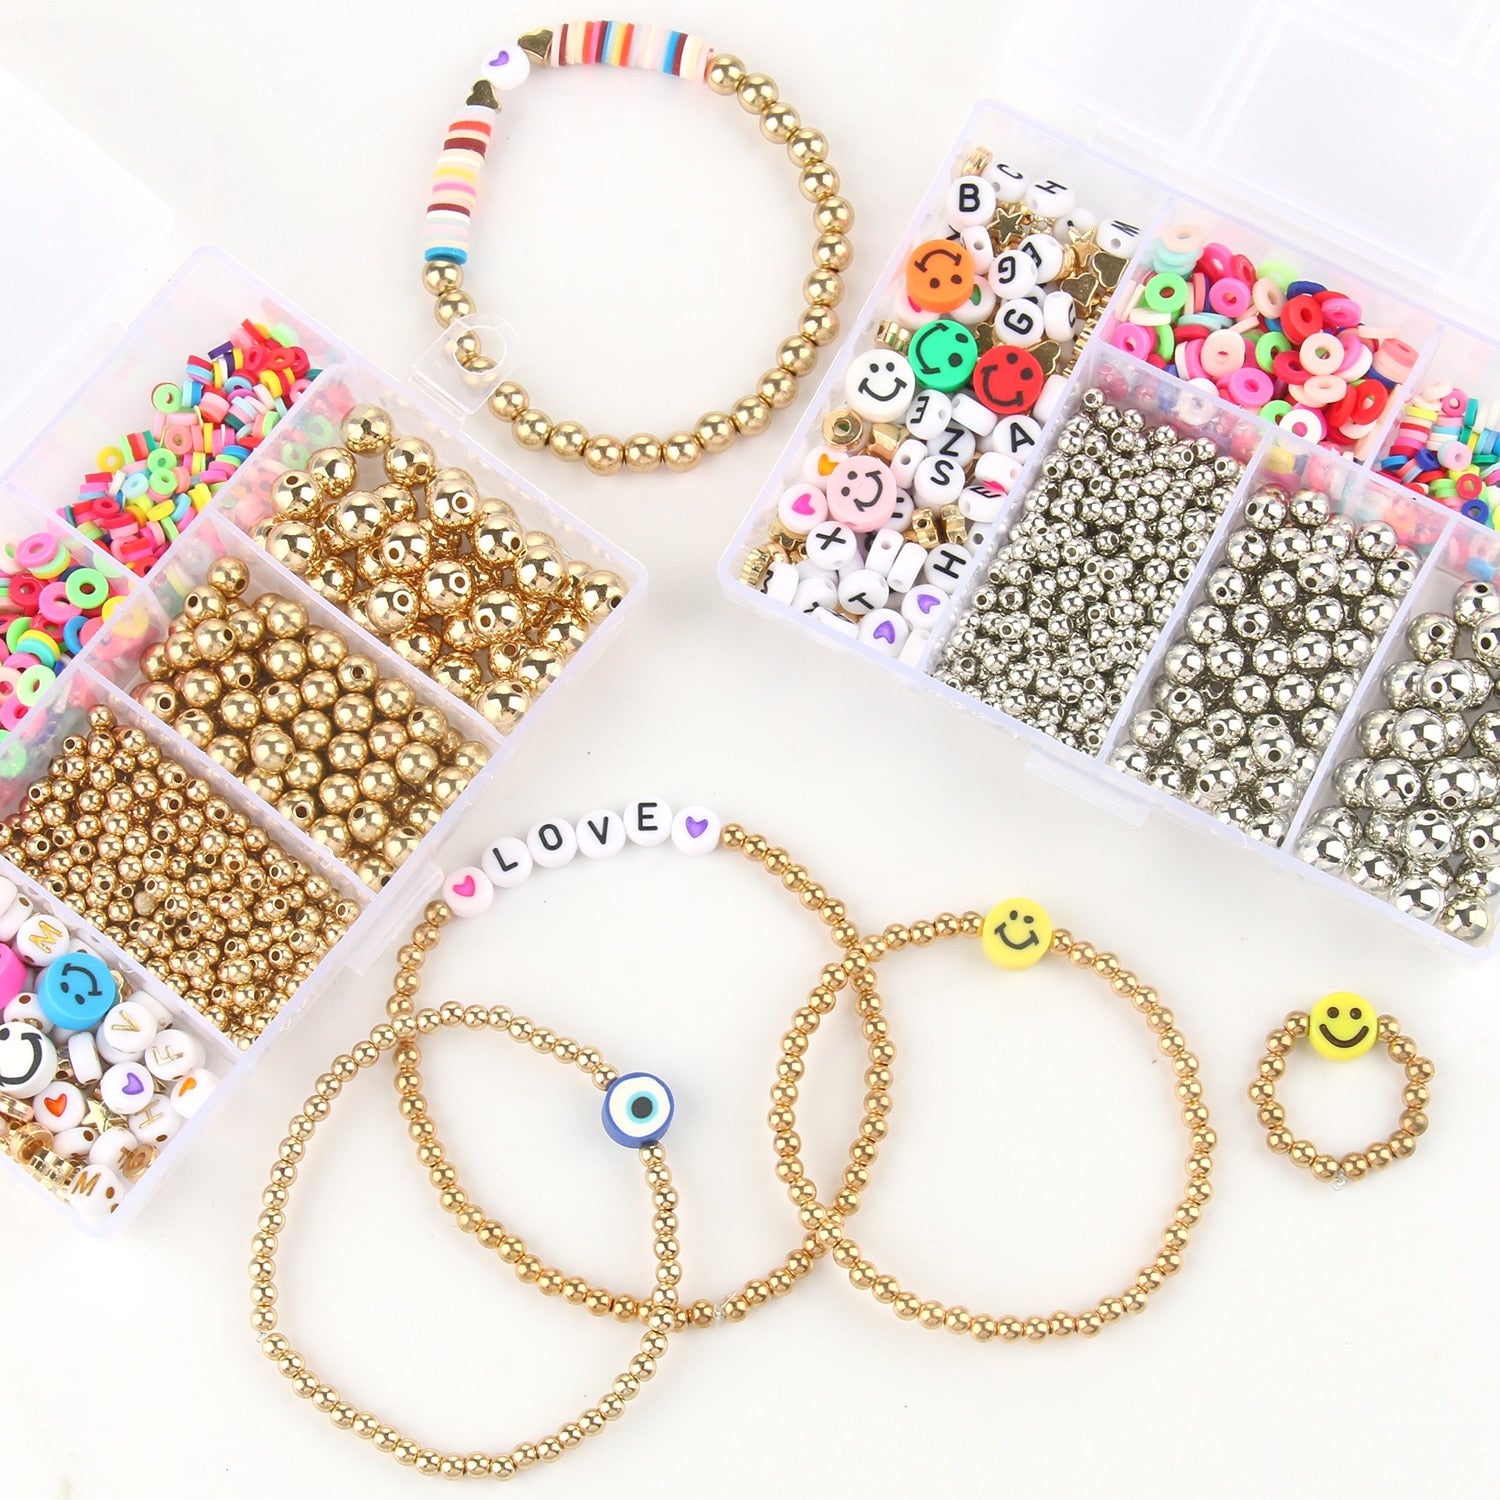 Colorations Bead & Bracelet Kit - 1 lb. of Beads and 24 Bracelets